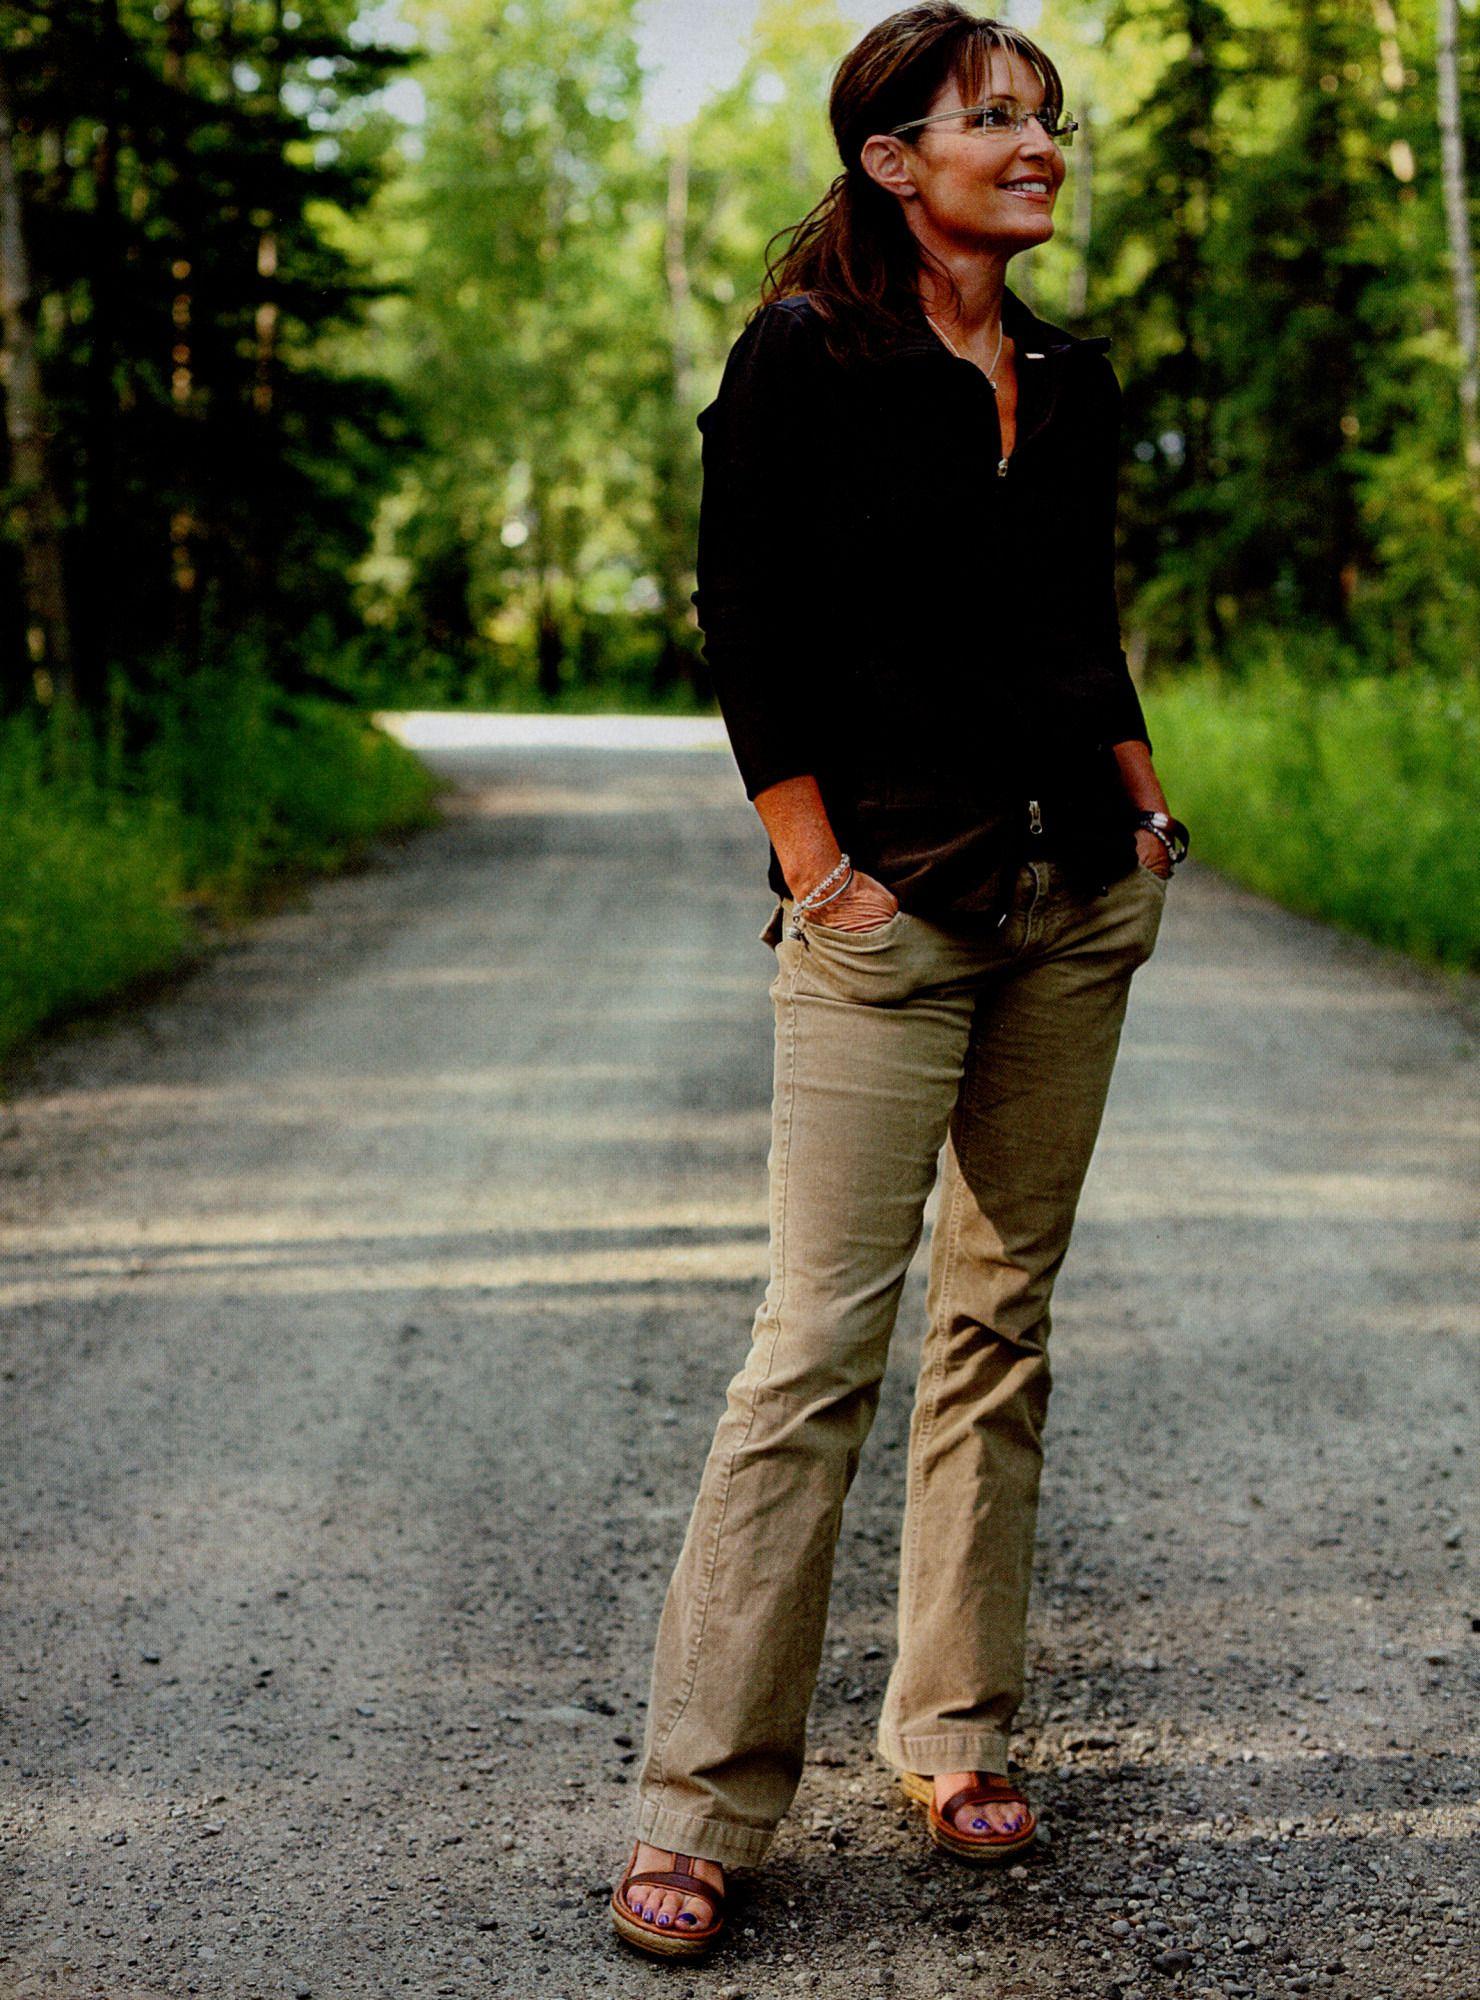 Sarah Palin's Feet wikiFeet.